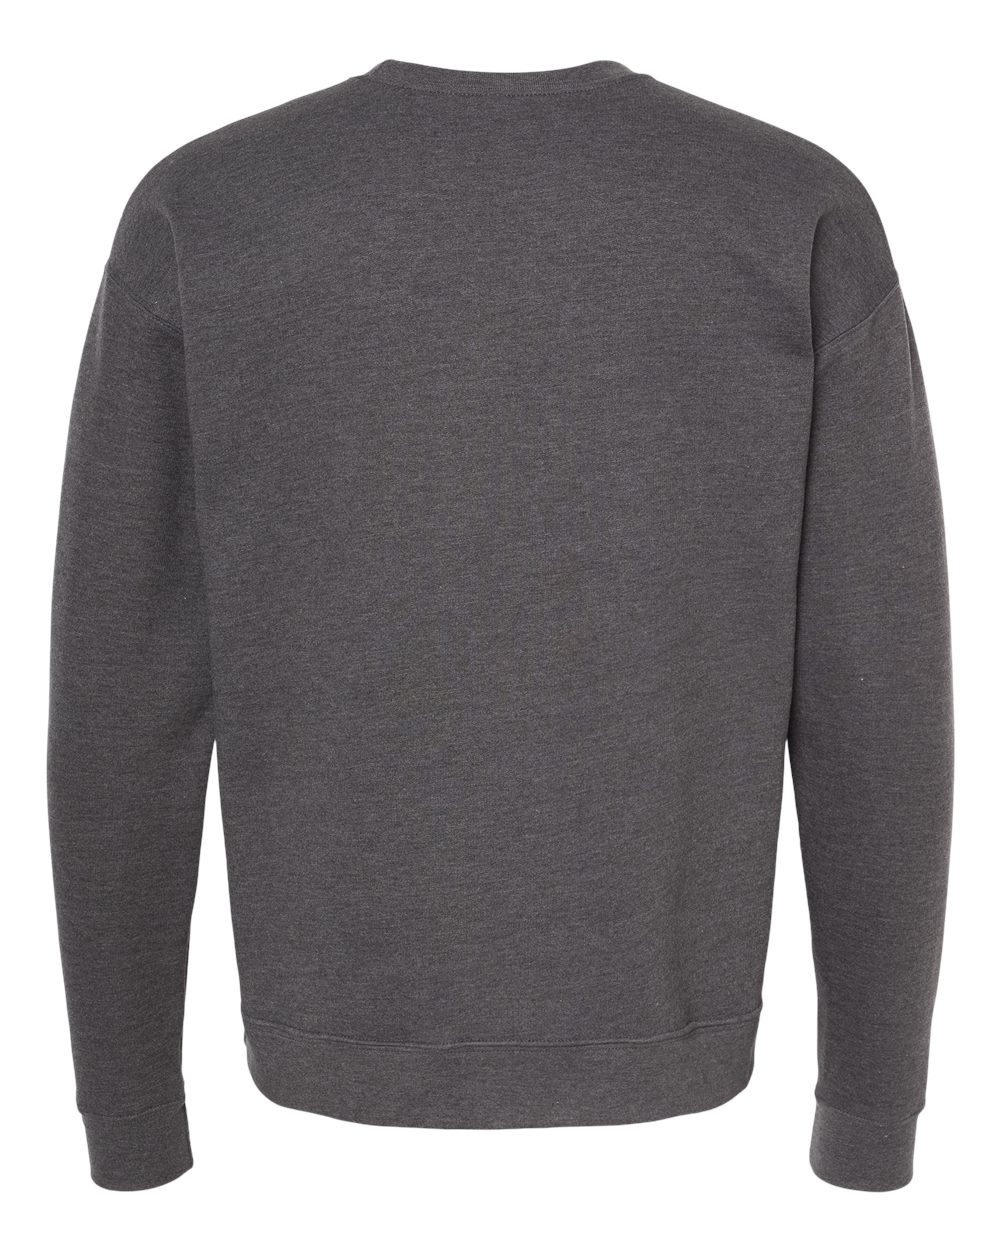 Tultex Men Fleece Crewneck Sweatshirt 340 Up To 3XL | eBay